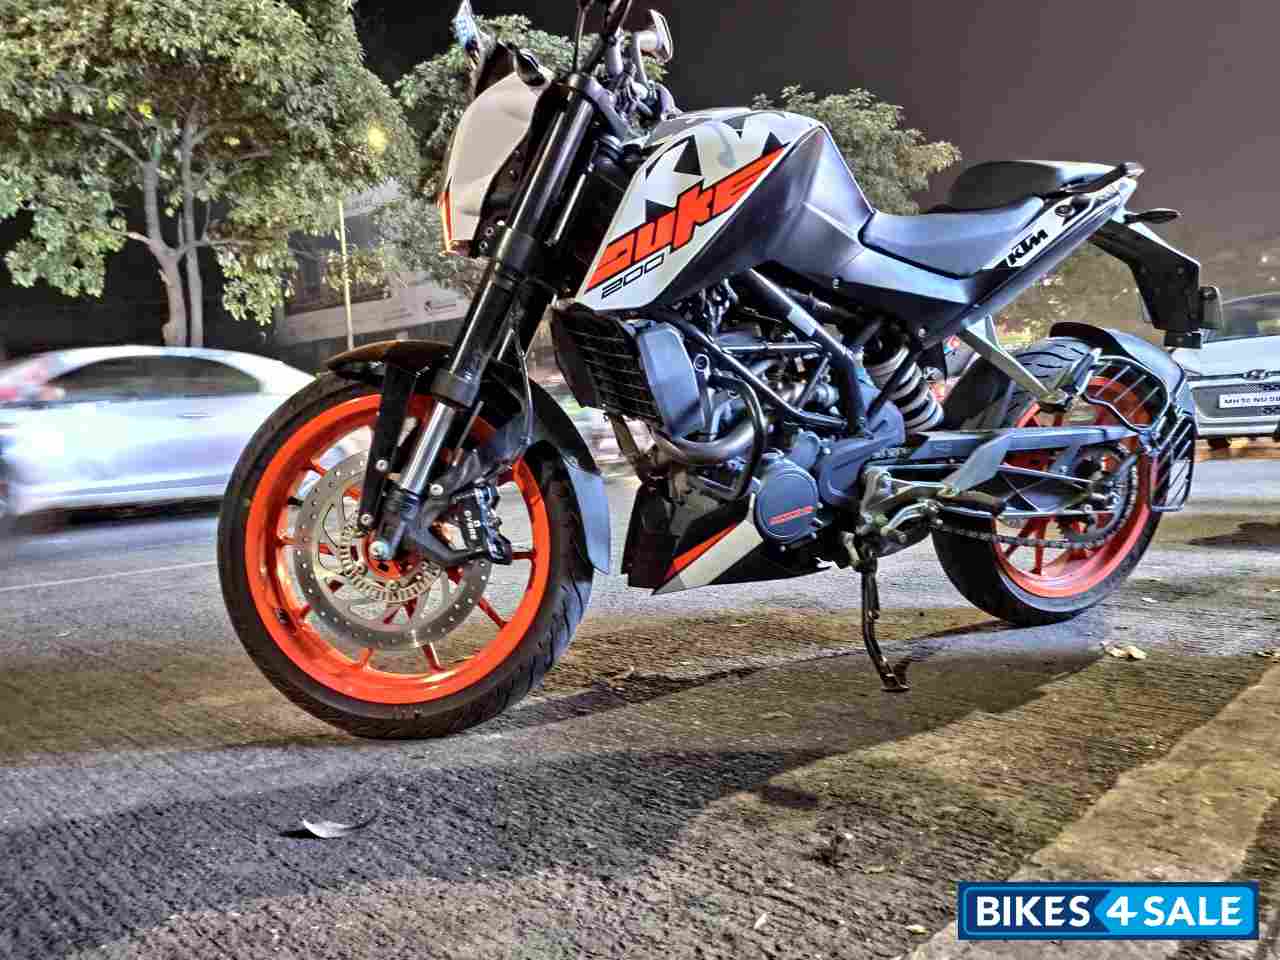 KTM Duke 200 ABS Picture 1. Bike ID 301613. Bike located in Pune -  Bikes4Sale